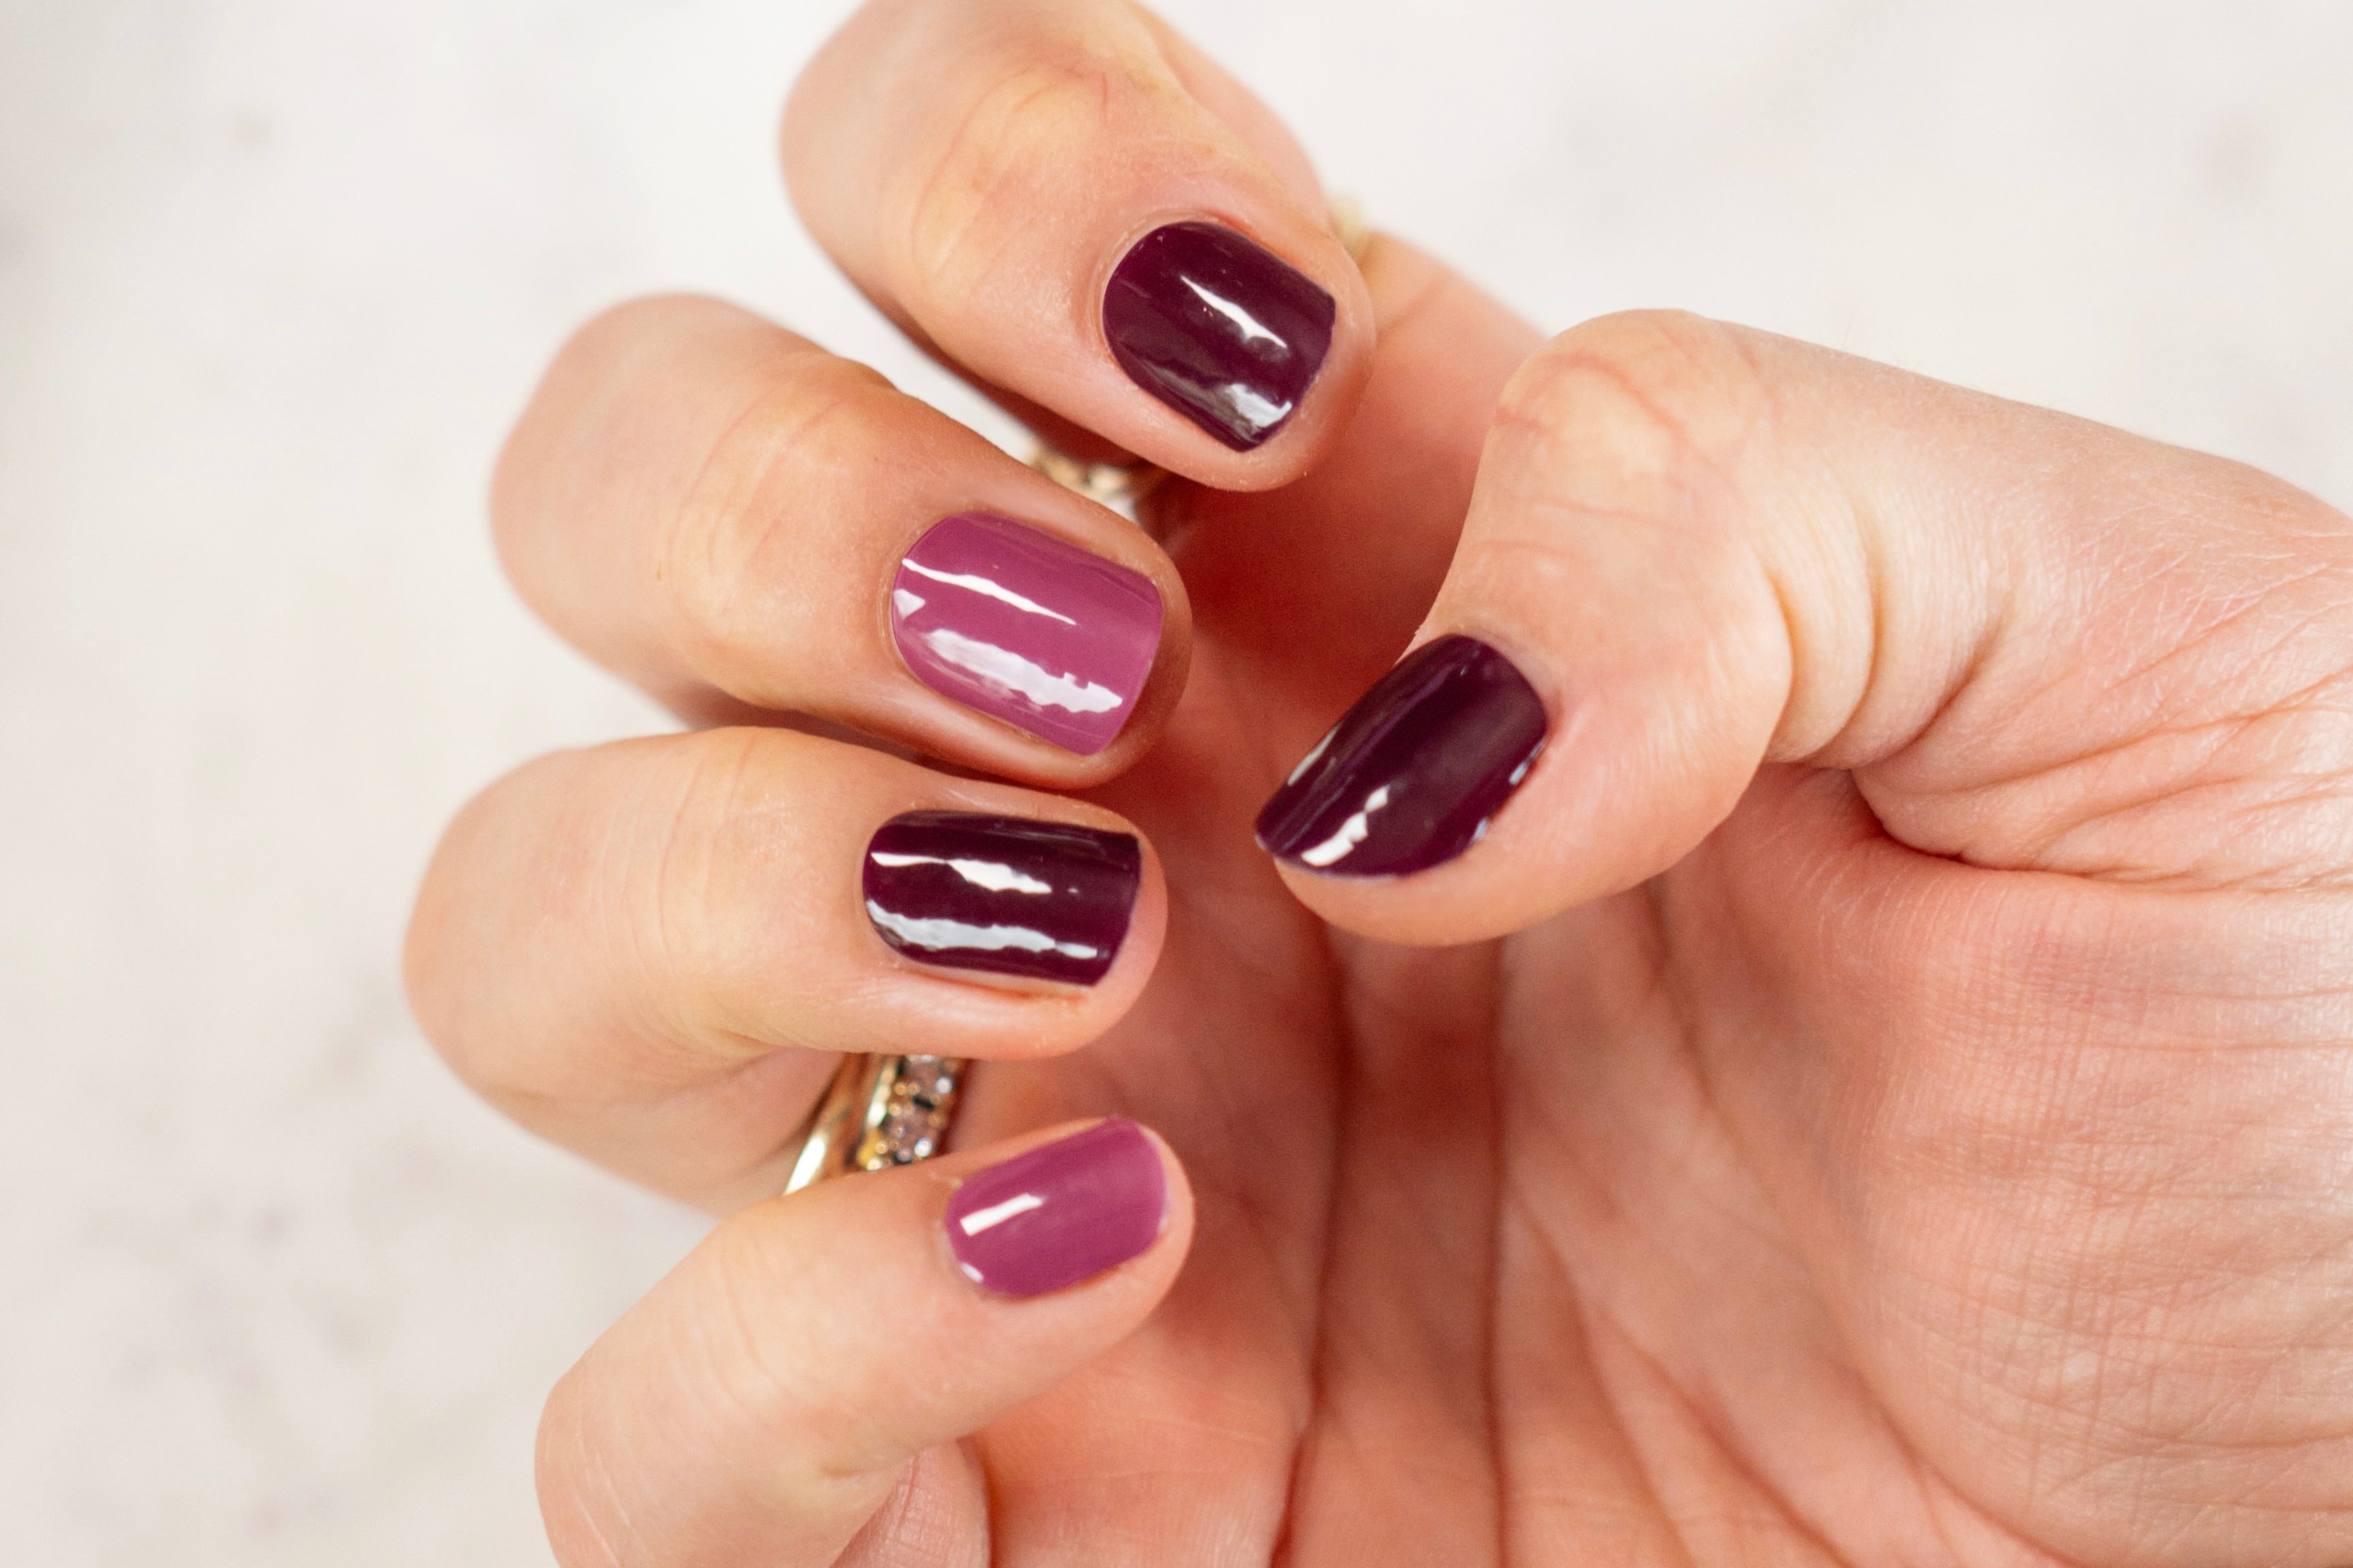 Carolien Spoor Maniac Nails Gellak Stickers Manicure Purple Nail Art Twice as Nice